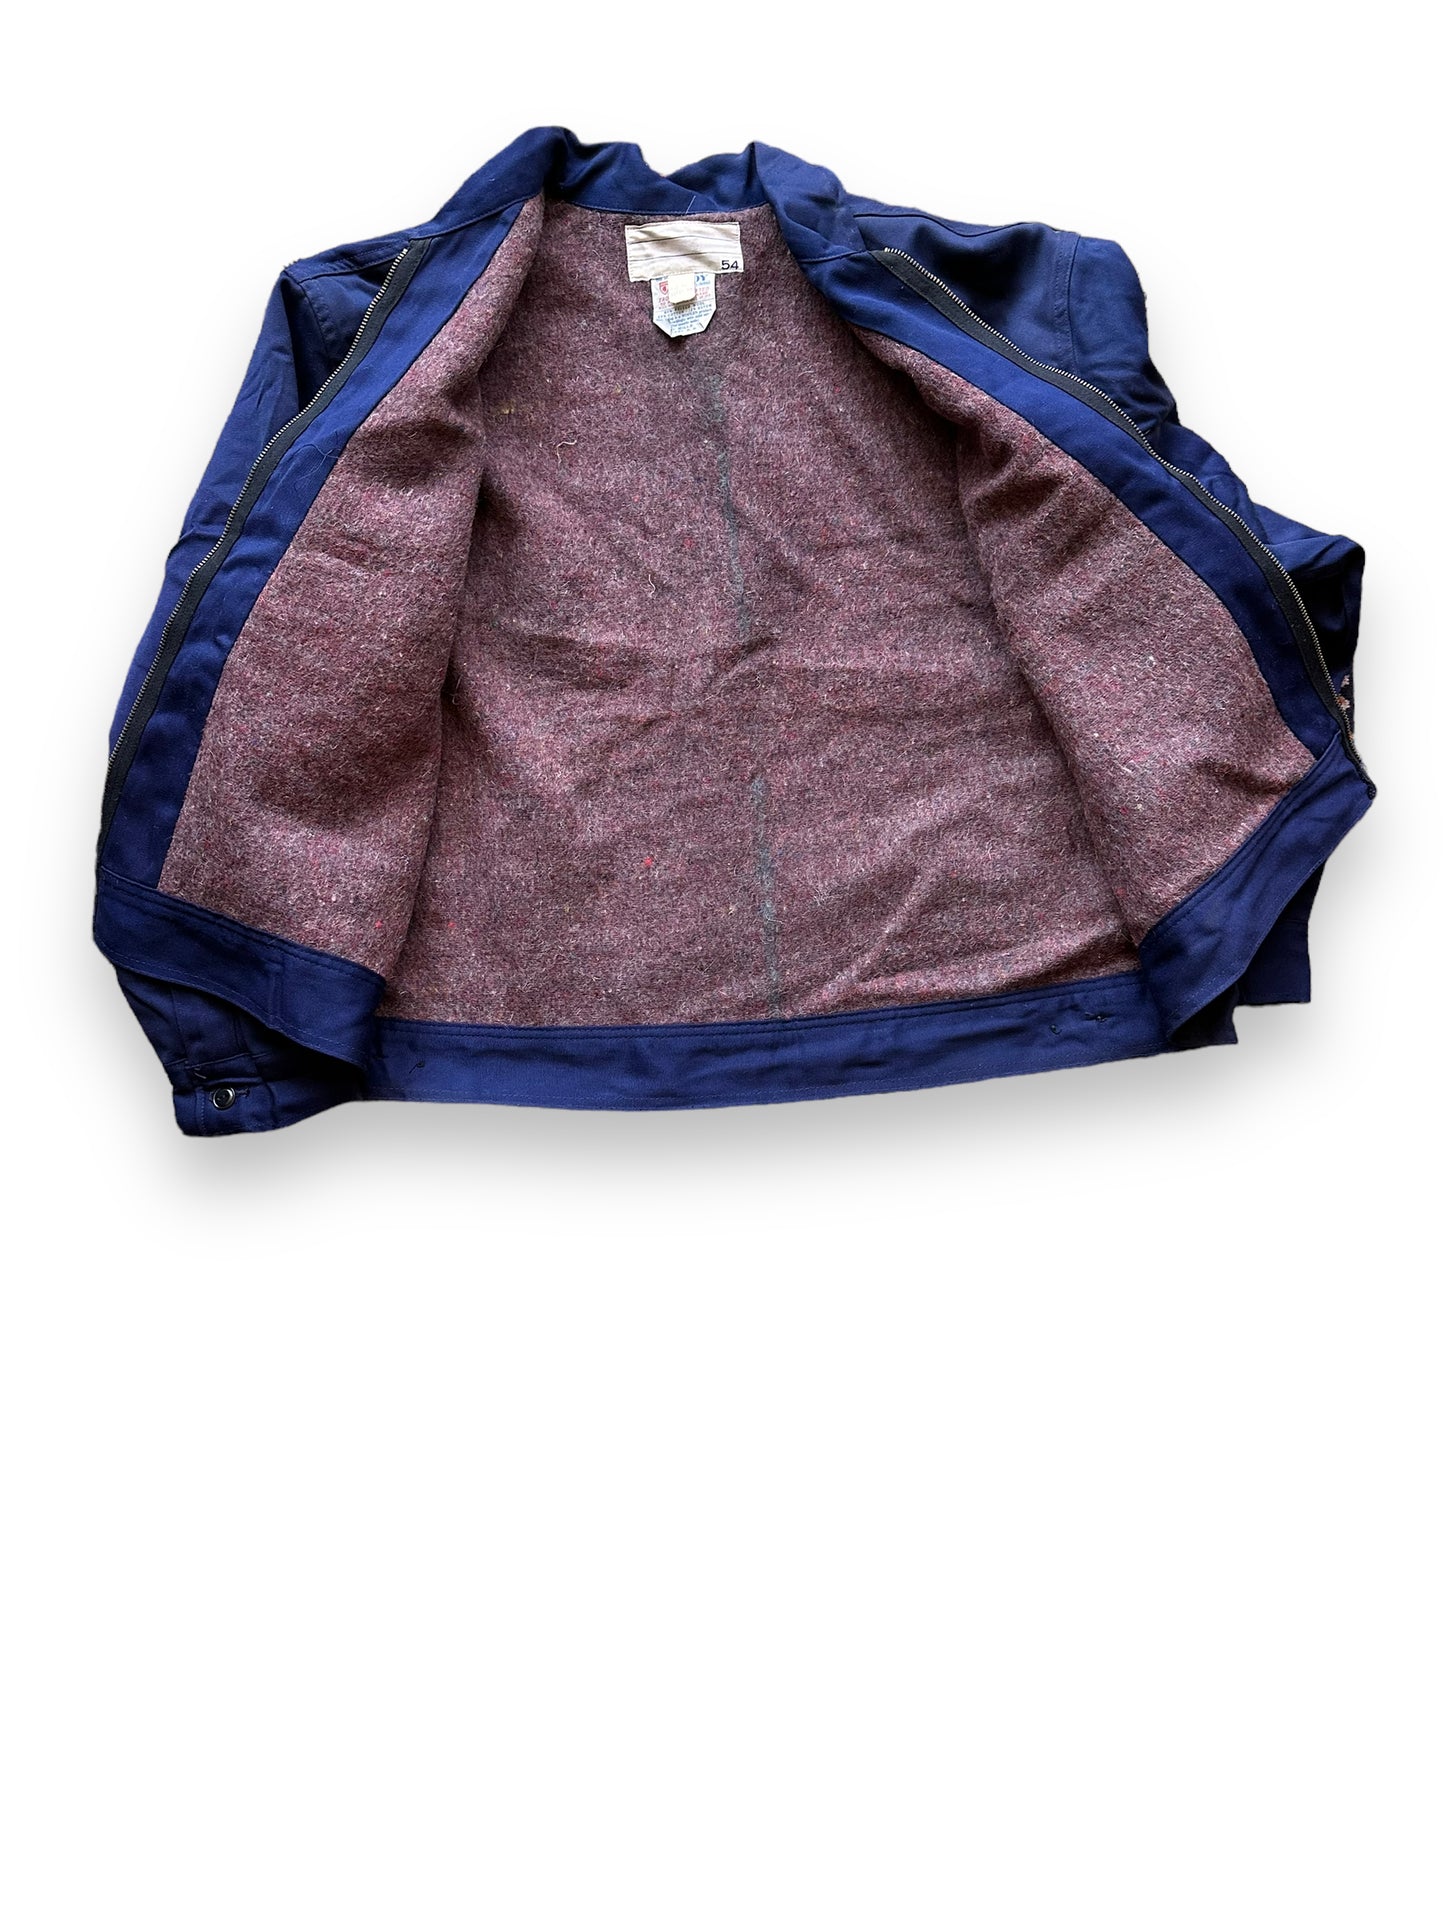 Lining View of Vintage Blue Troy Blanket Lined Gas Station Jacket SZ 54 | Vintage Workwear Jacket Seattle | Seattle Vintage Clothing